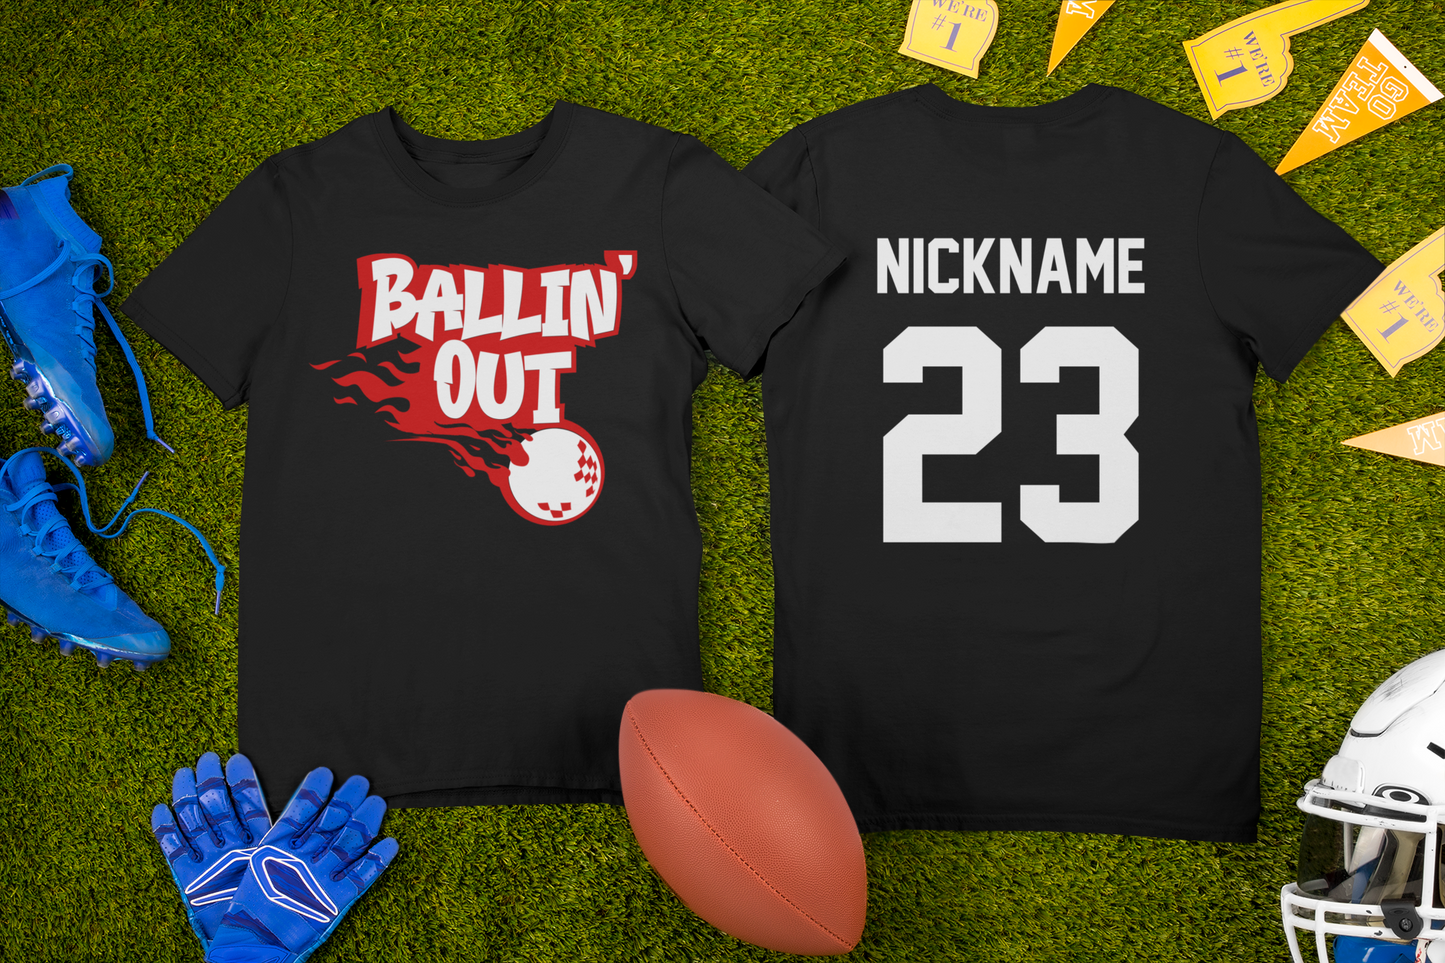 Kickball Shirts